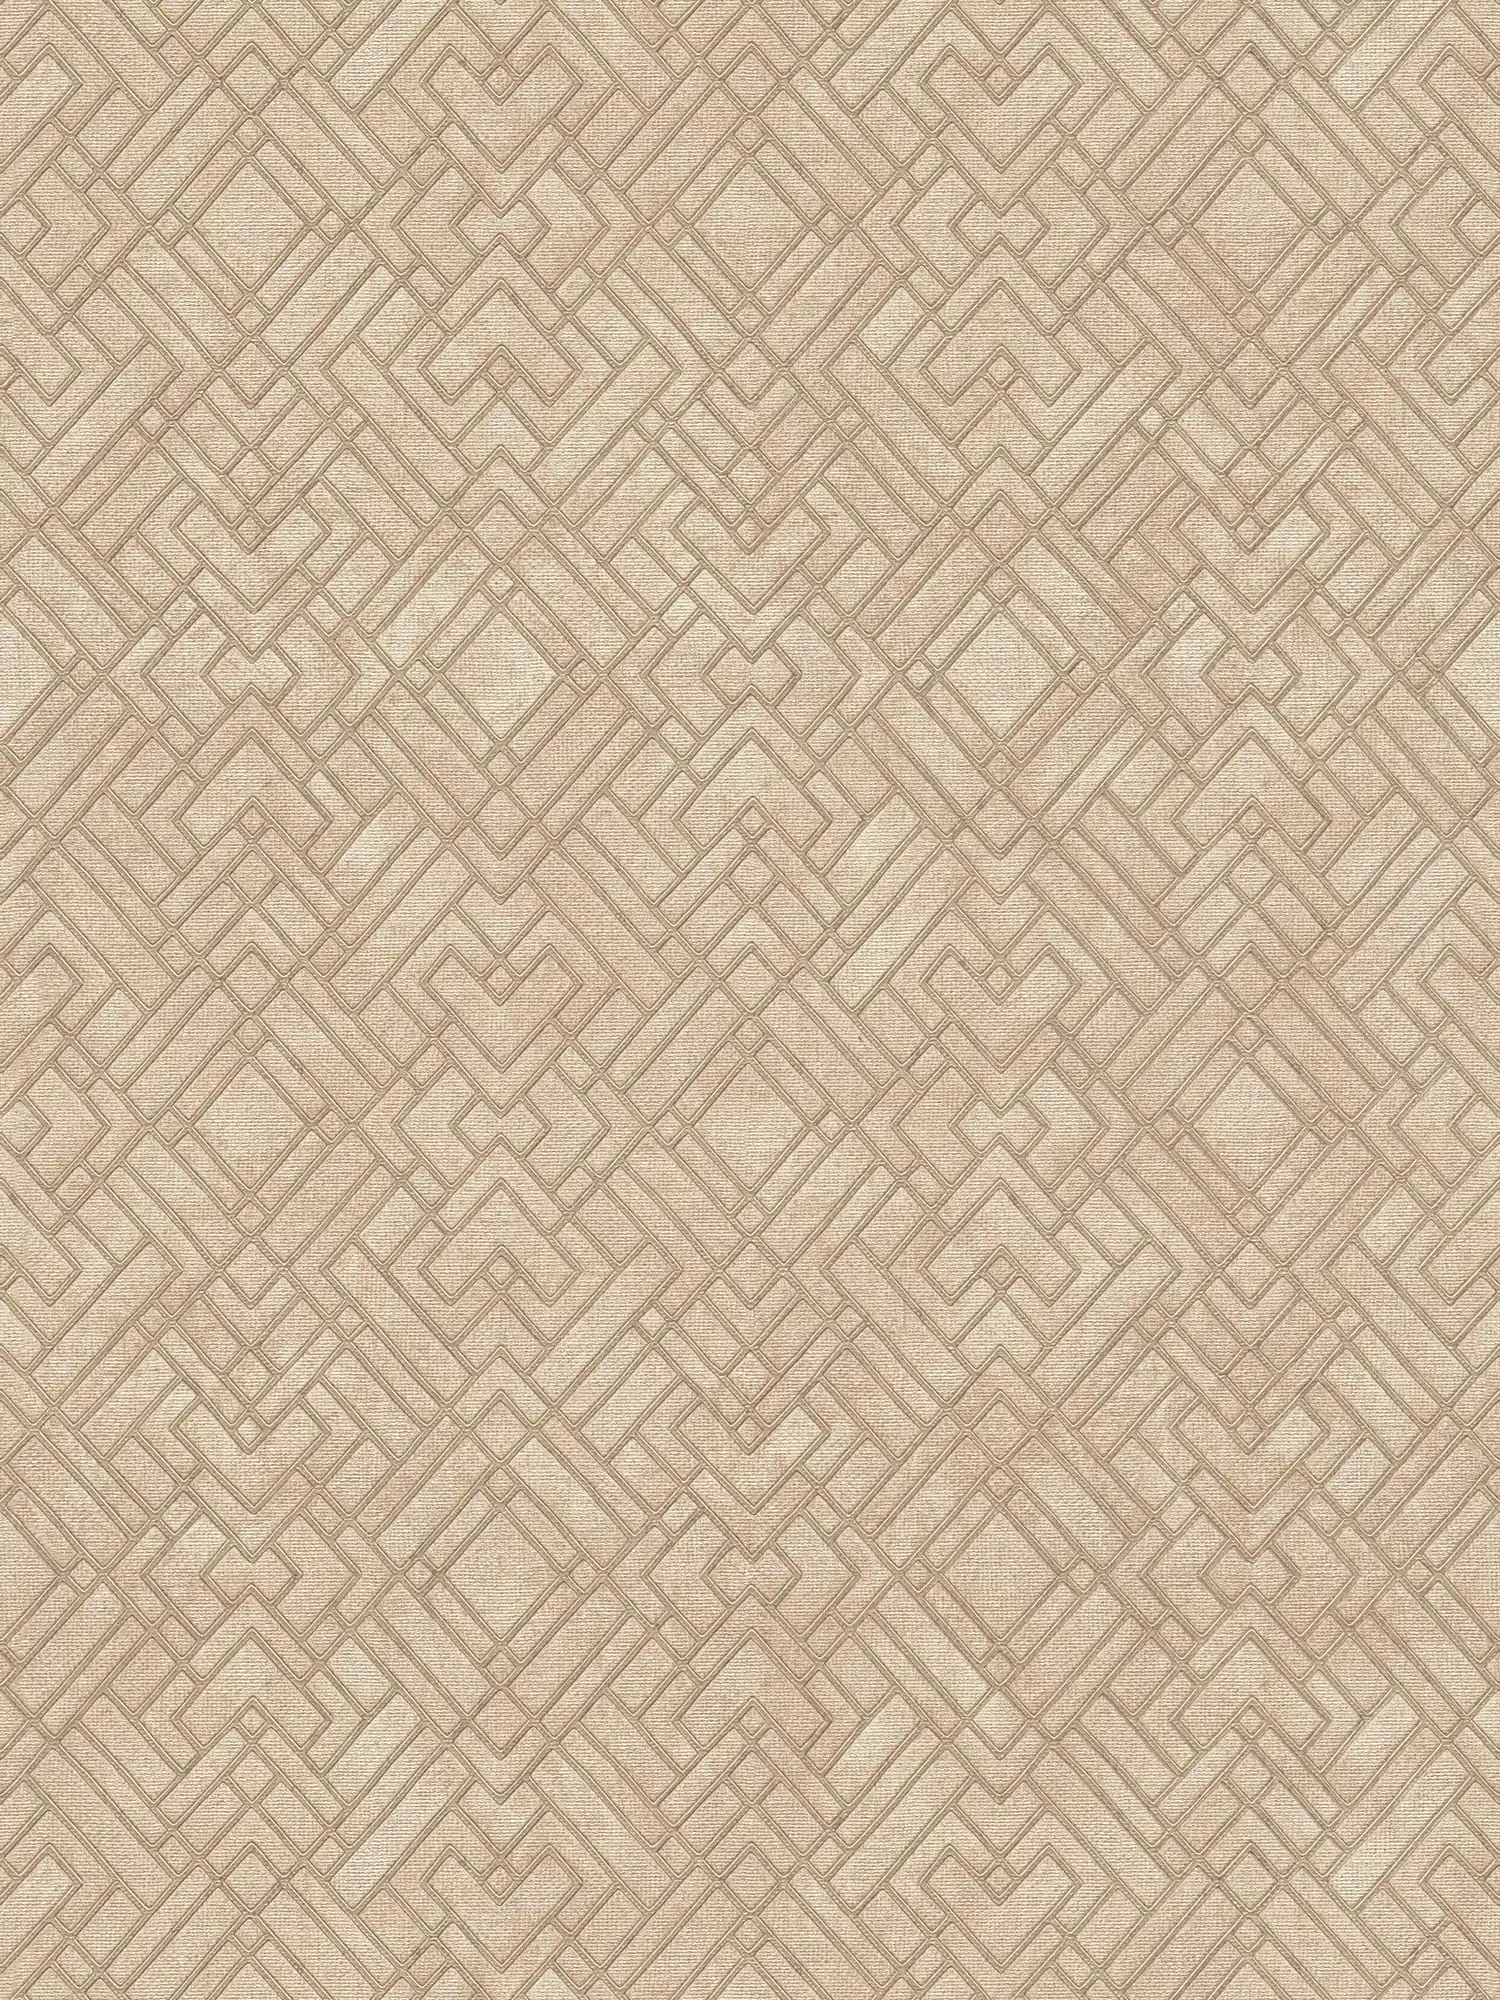         Metallic wallpaper with lines graphic - yellow, beige
    